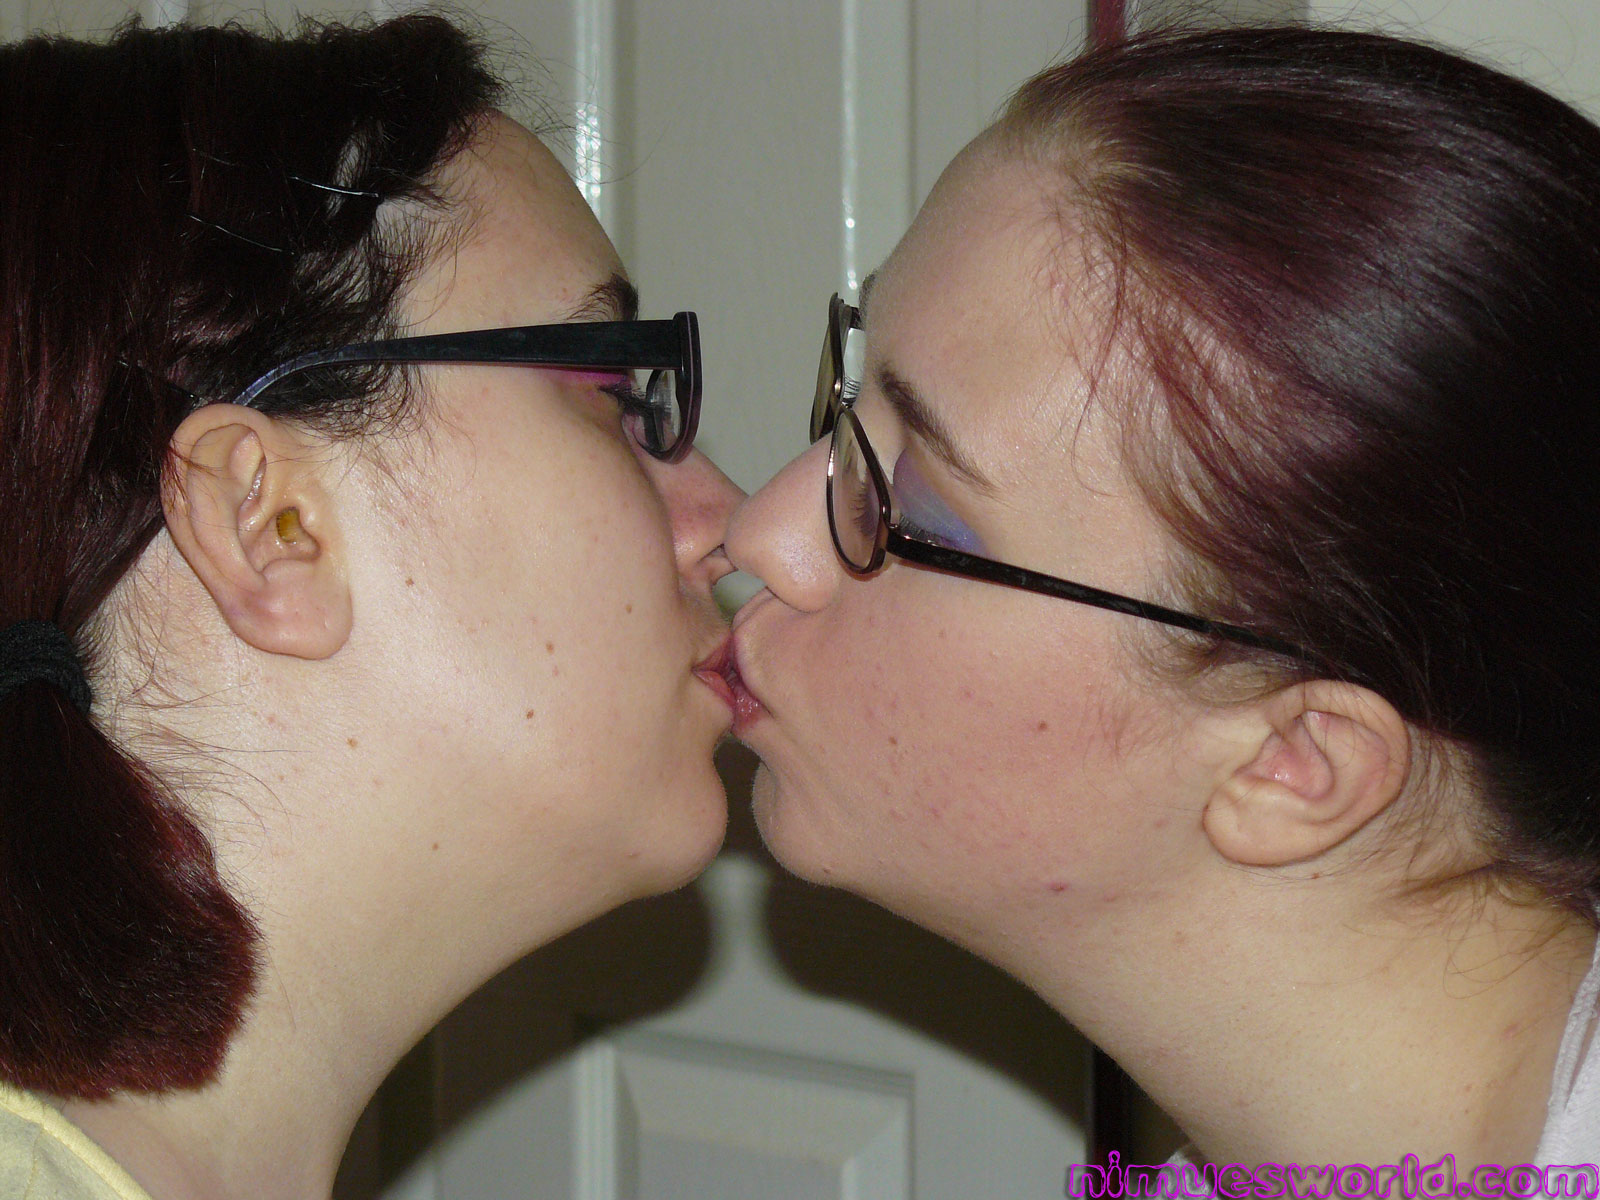 Nerdy Lesbians Kissing - Geeky Lesbians Kissing â€“ College Beauty College